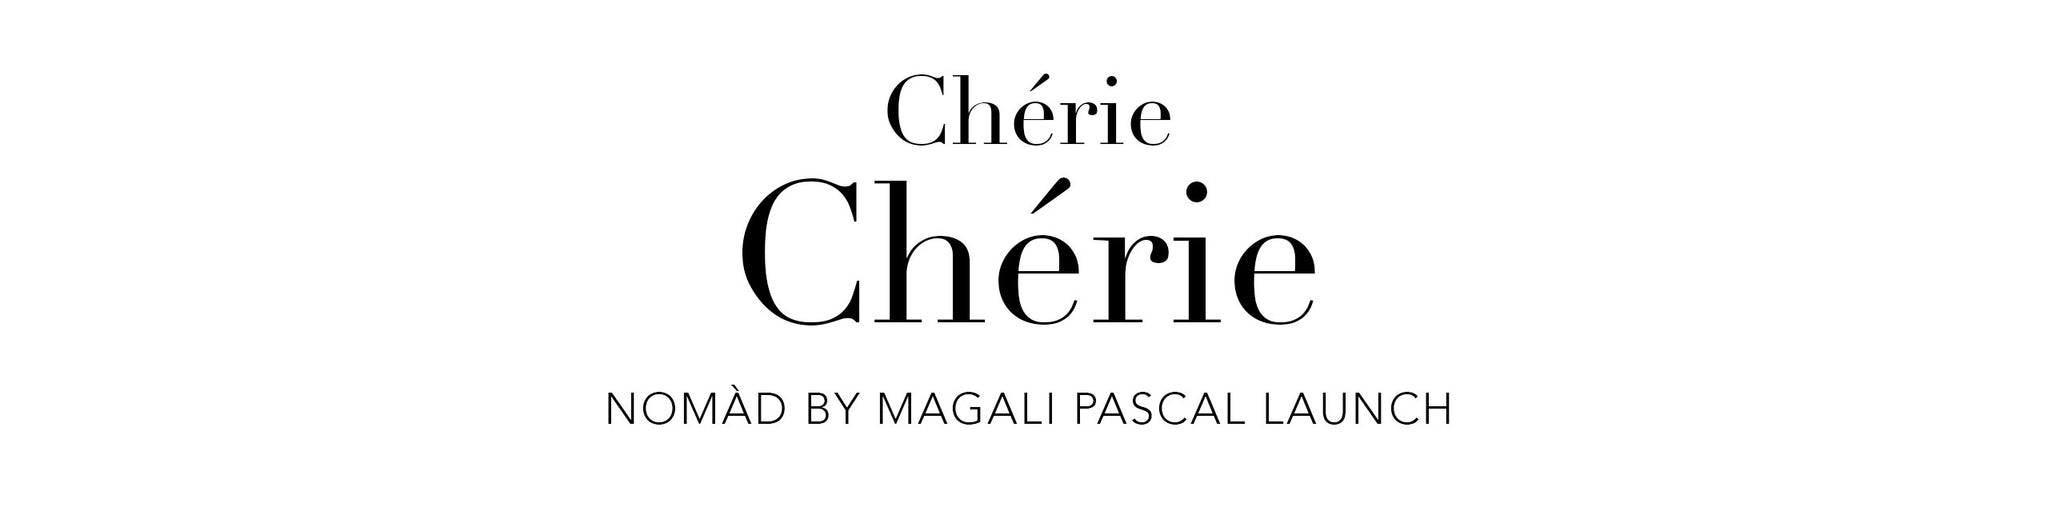 Cherie Cherie Launch Event